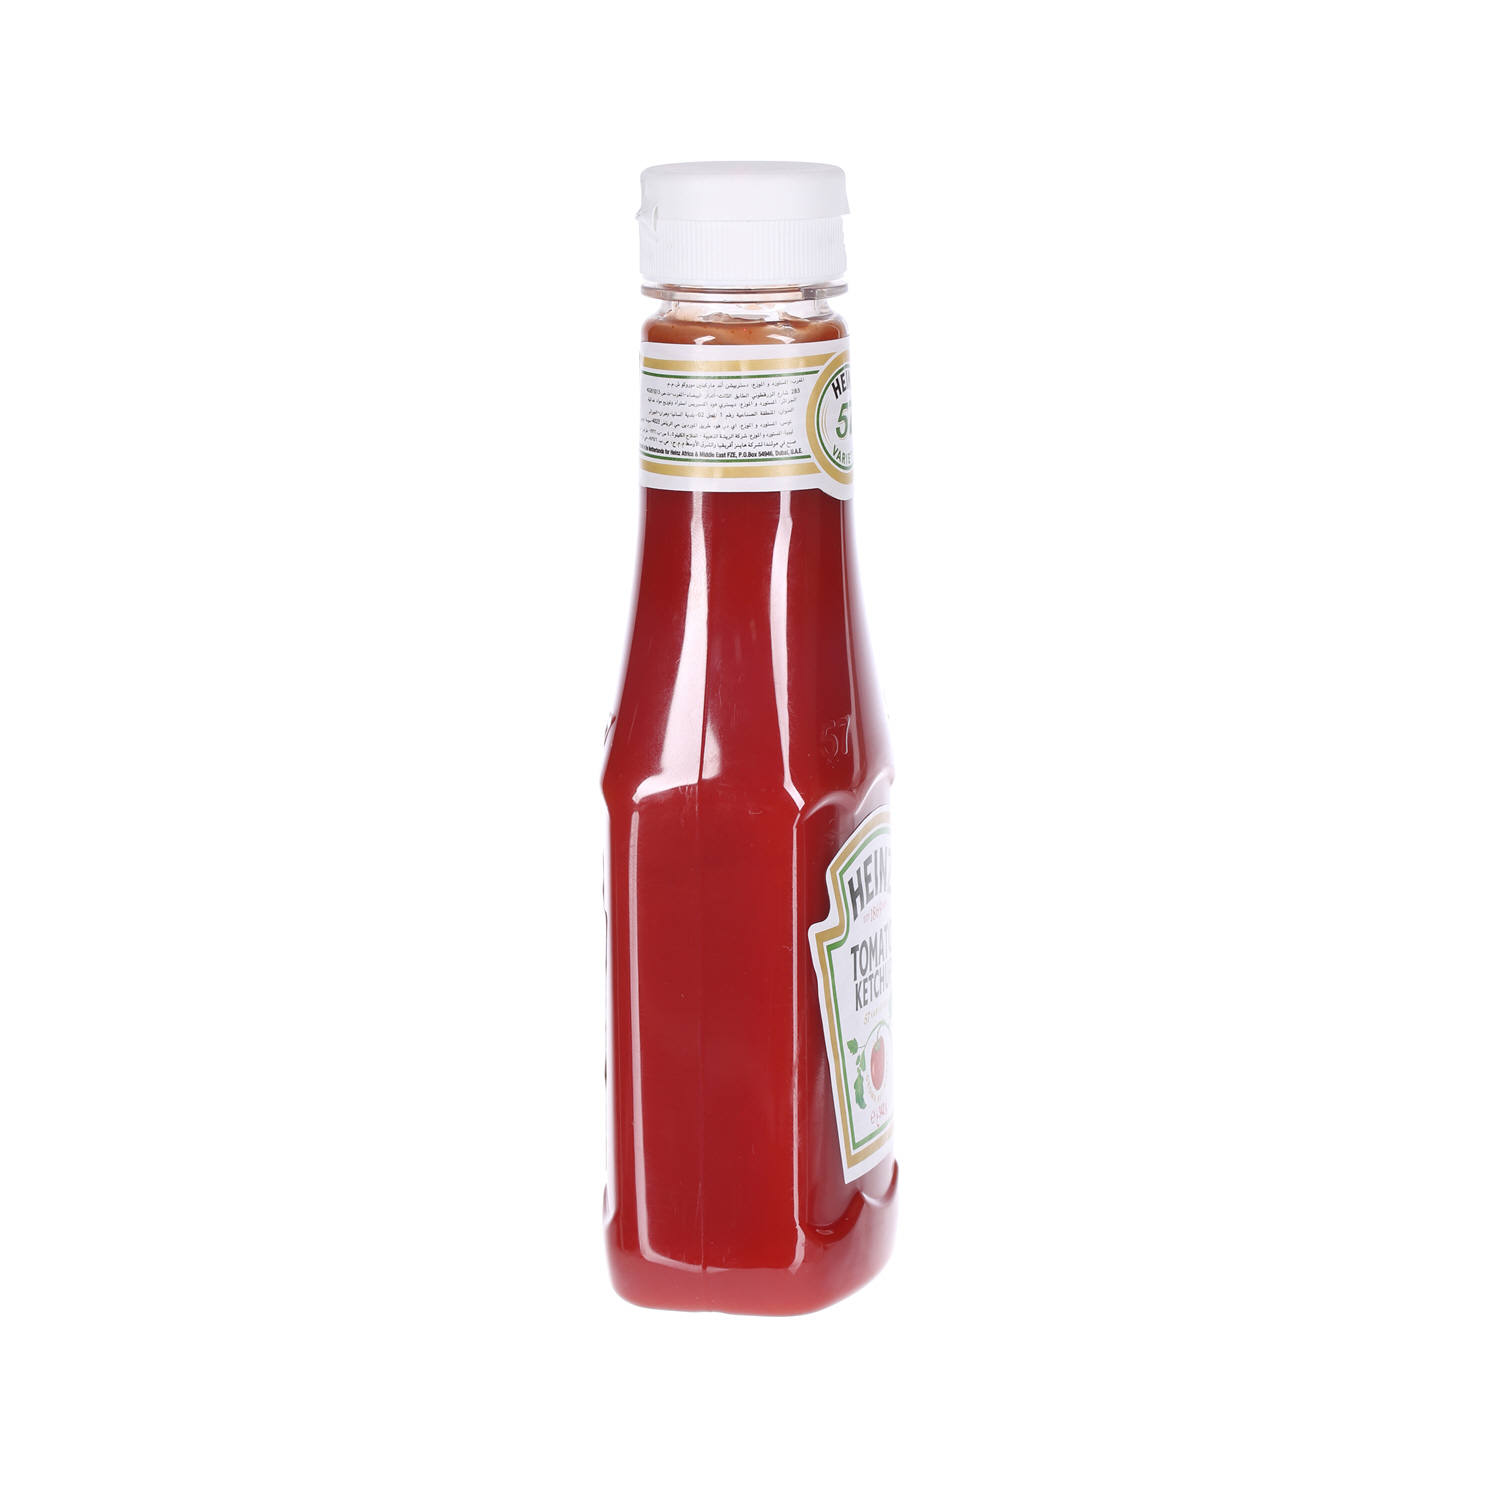 Heinz Ketchup Plastic Bottle 342 g